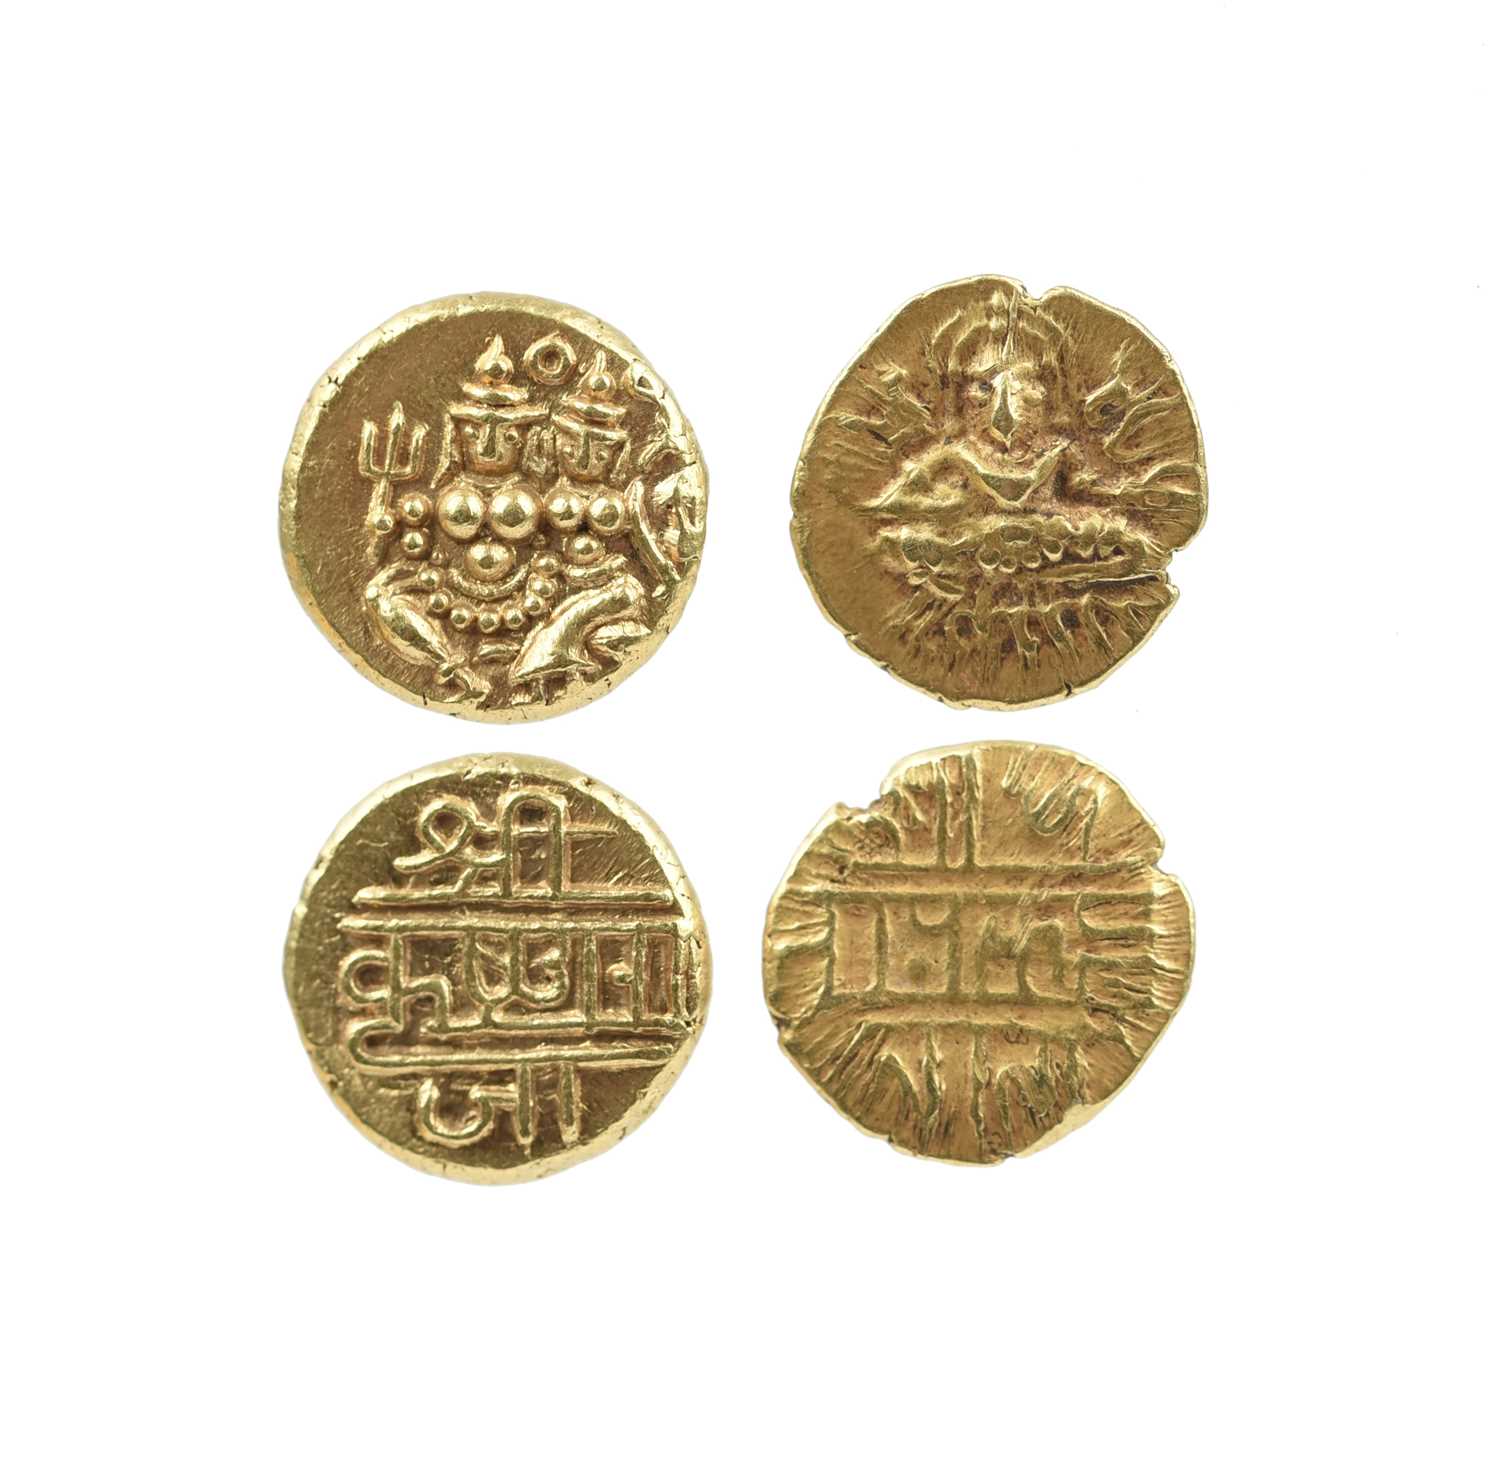 Medieval India - Vijayanagar Empire (14th-17th century): two gold coins: i) pagoda, Siva and Parvati